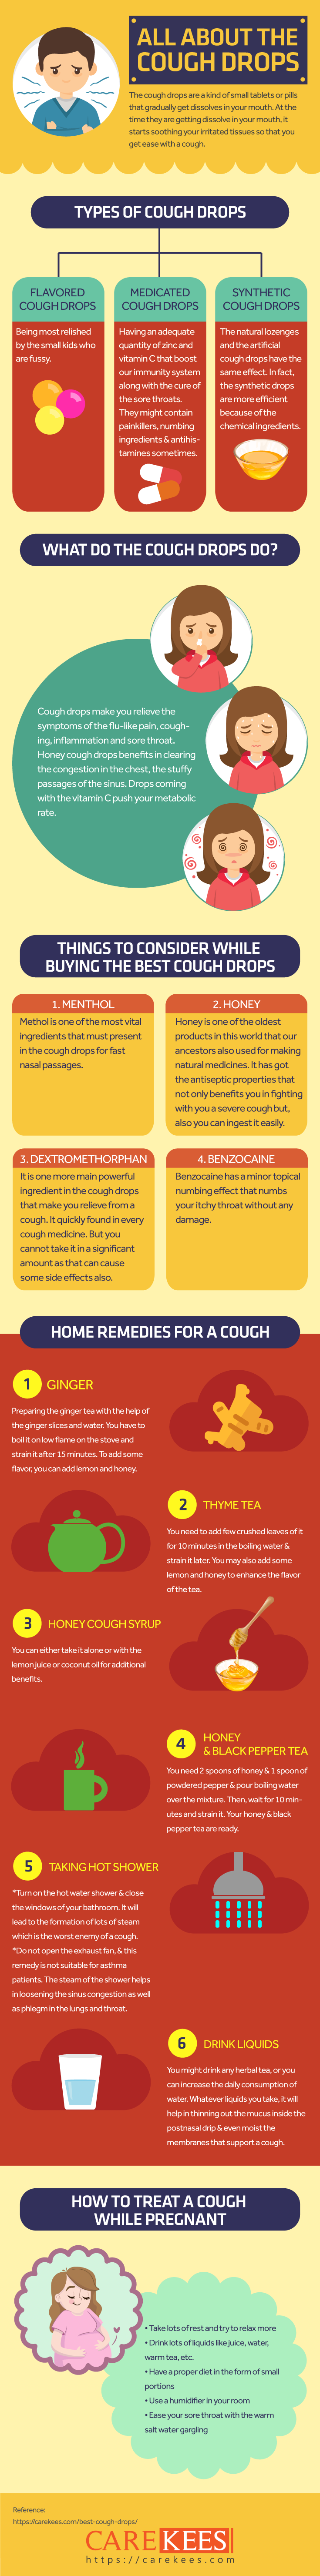 the best cough drops